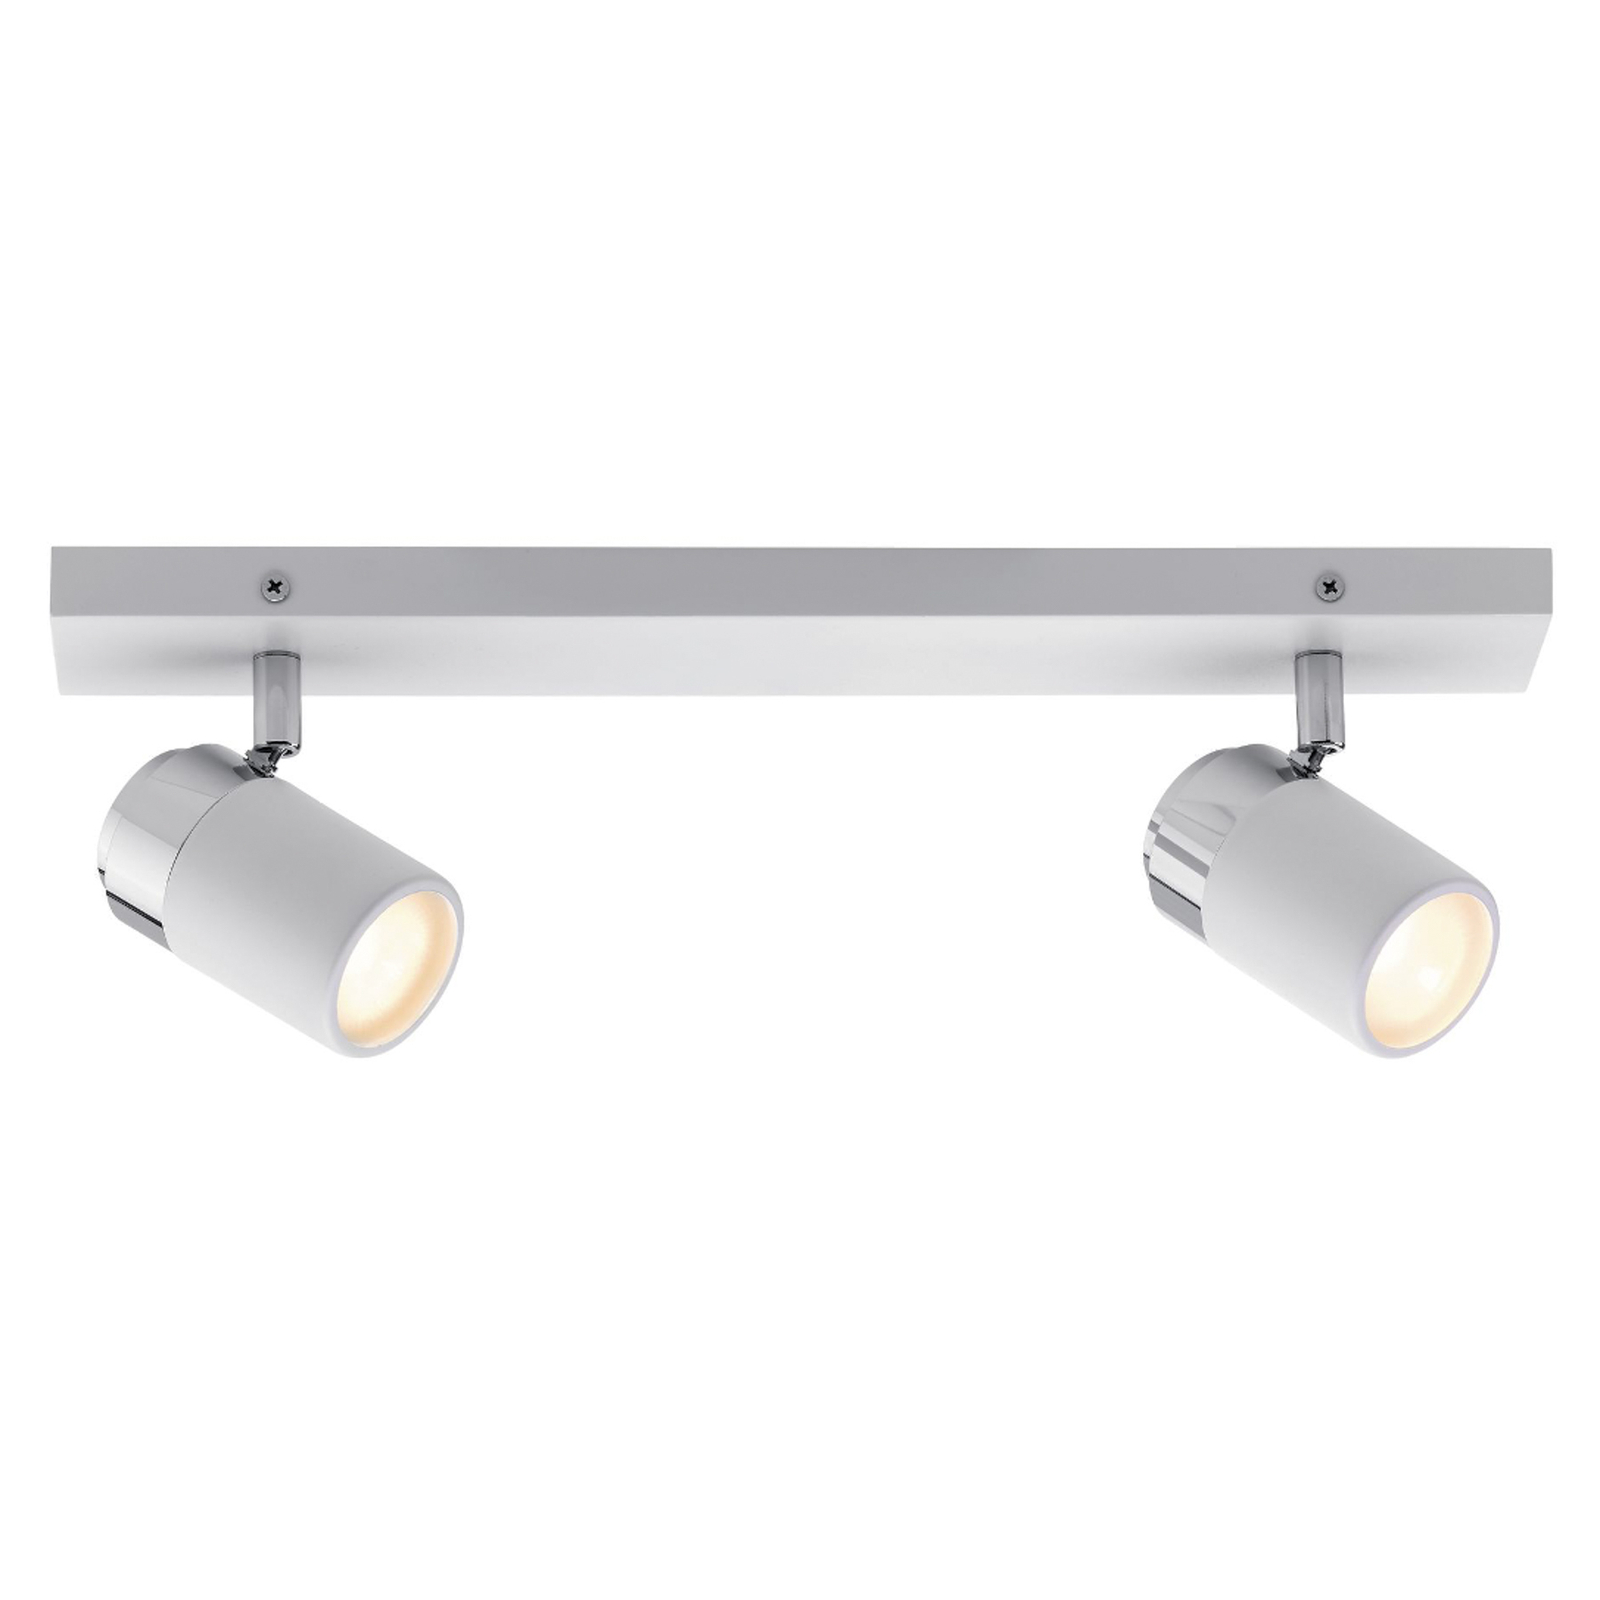 Paulmann Zyli spot plafond blanc/chrome, 2 lampes